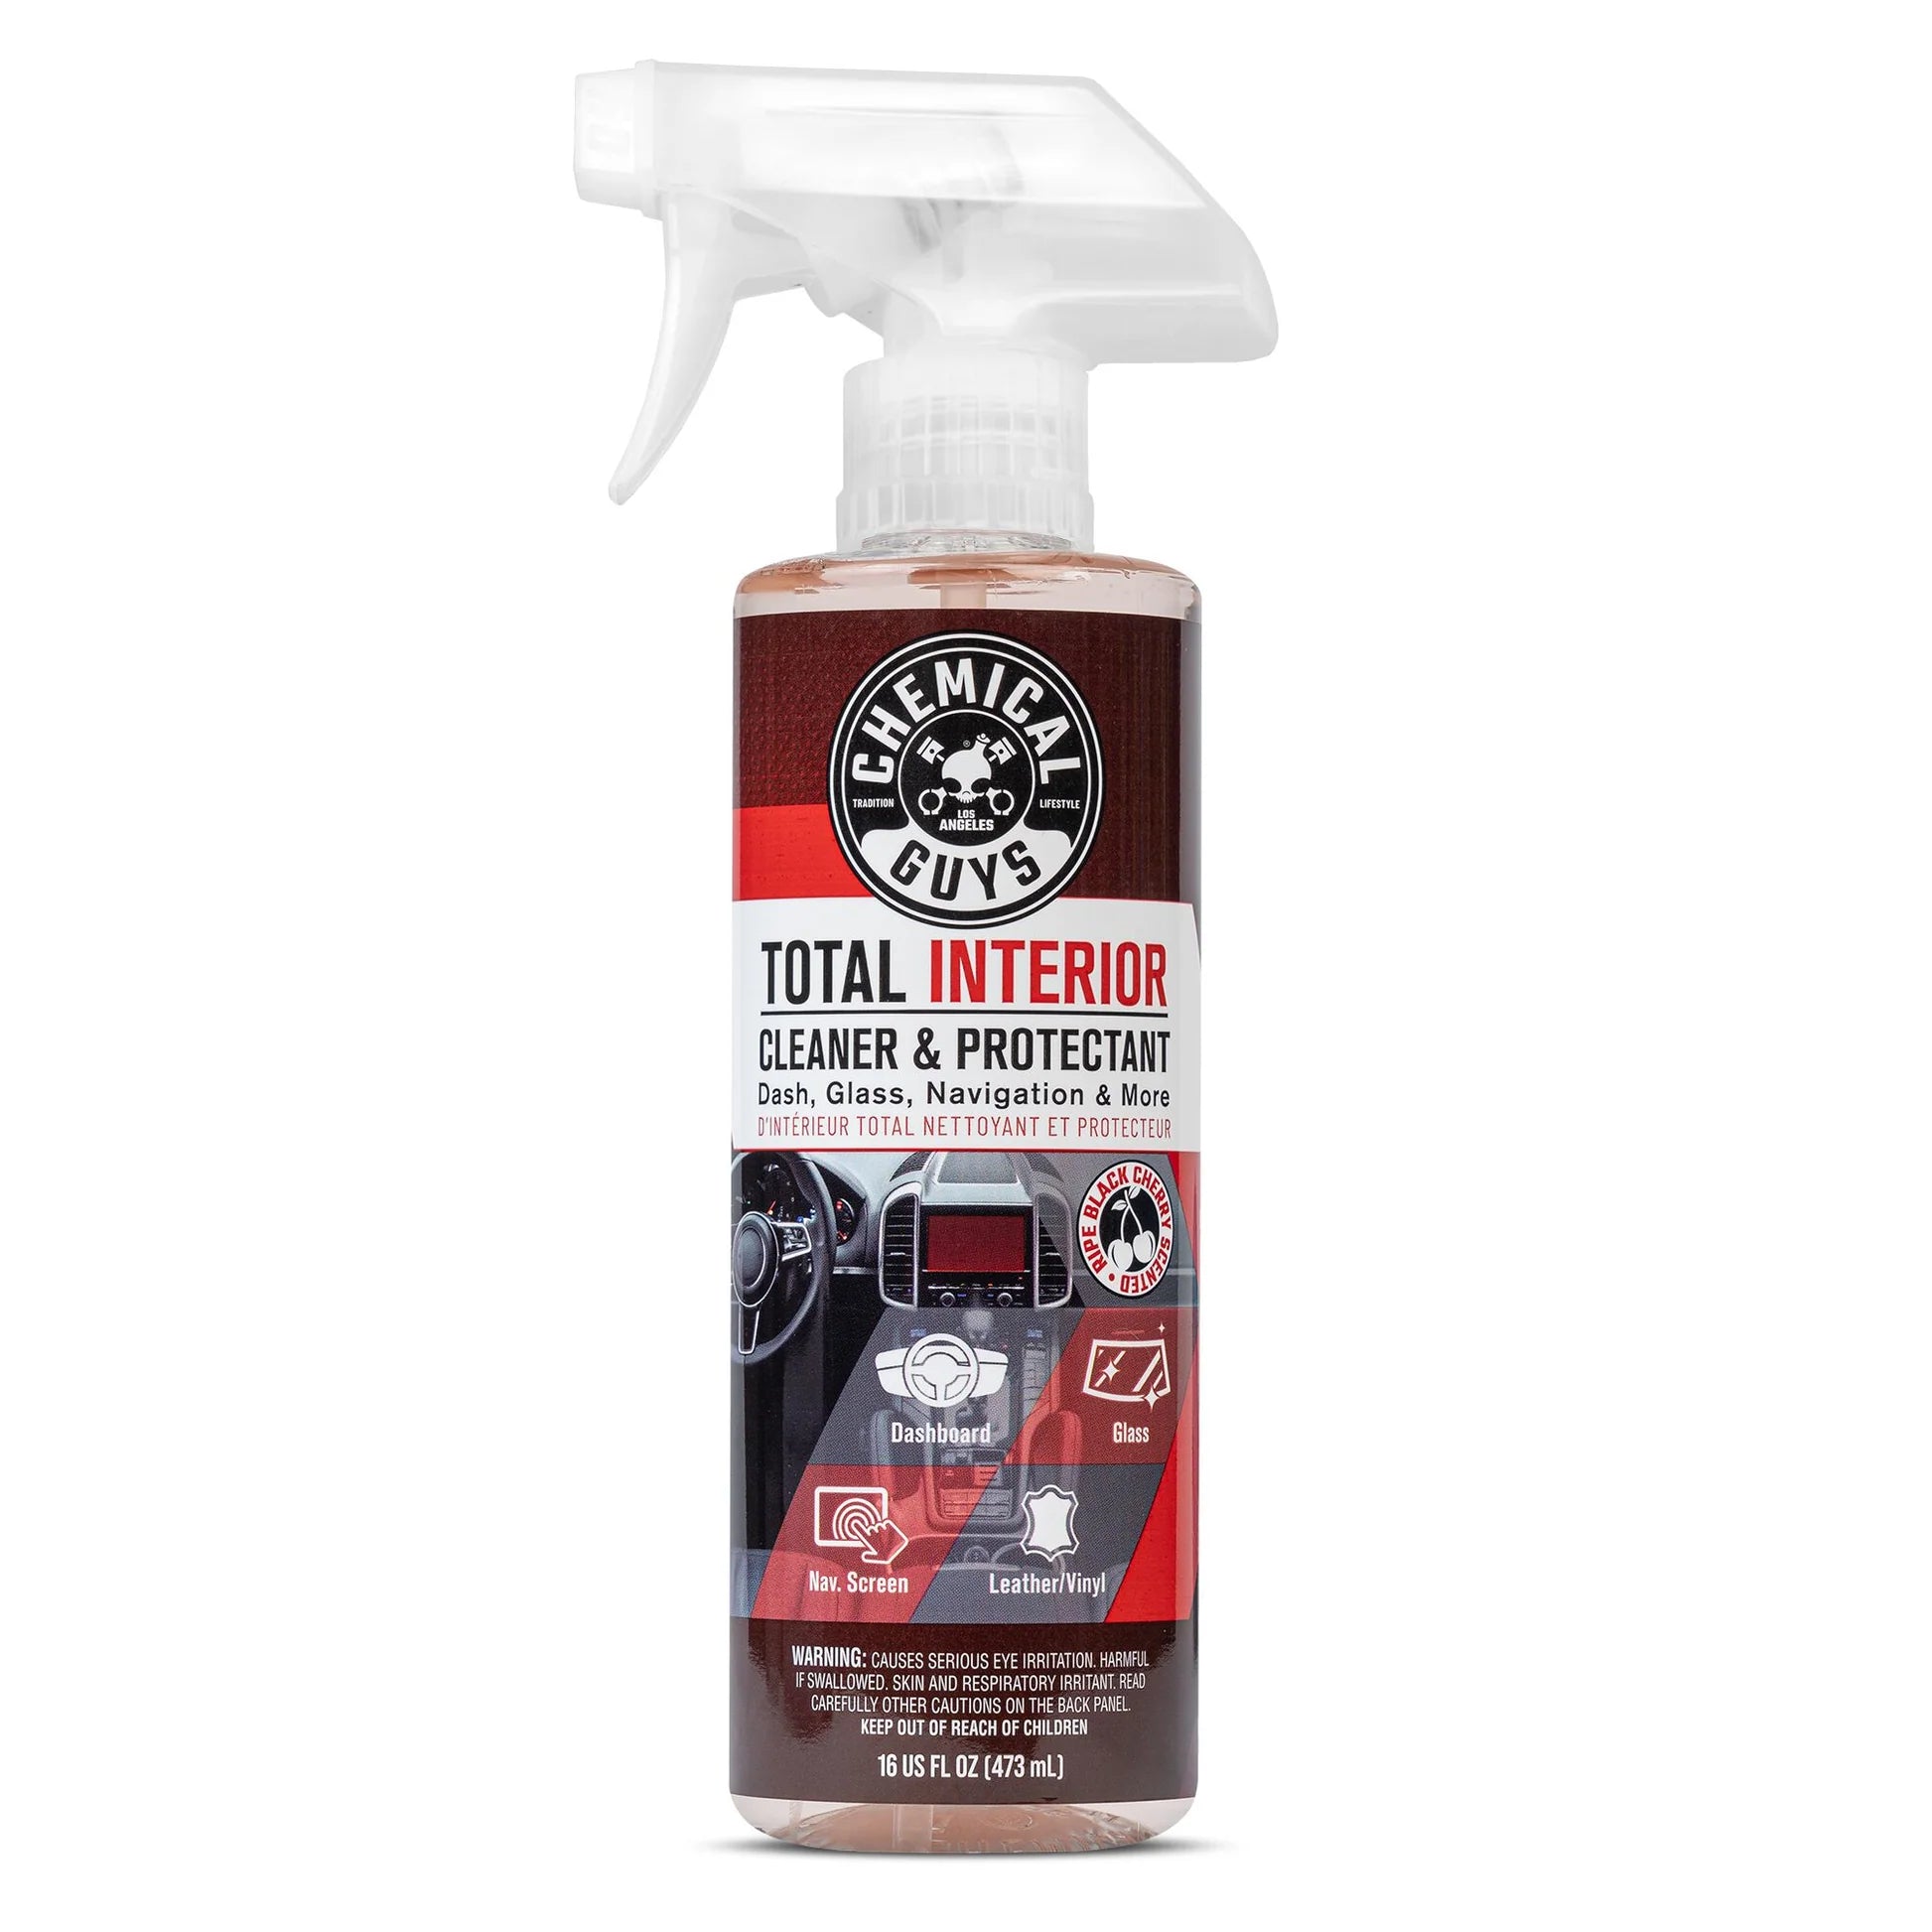 Total Interior Cleaner & Protectant, Black Cherry Scent parfum cerise (16 oz) - CHEMICAL GUYS